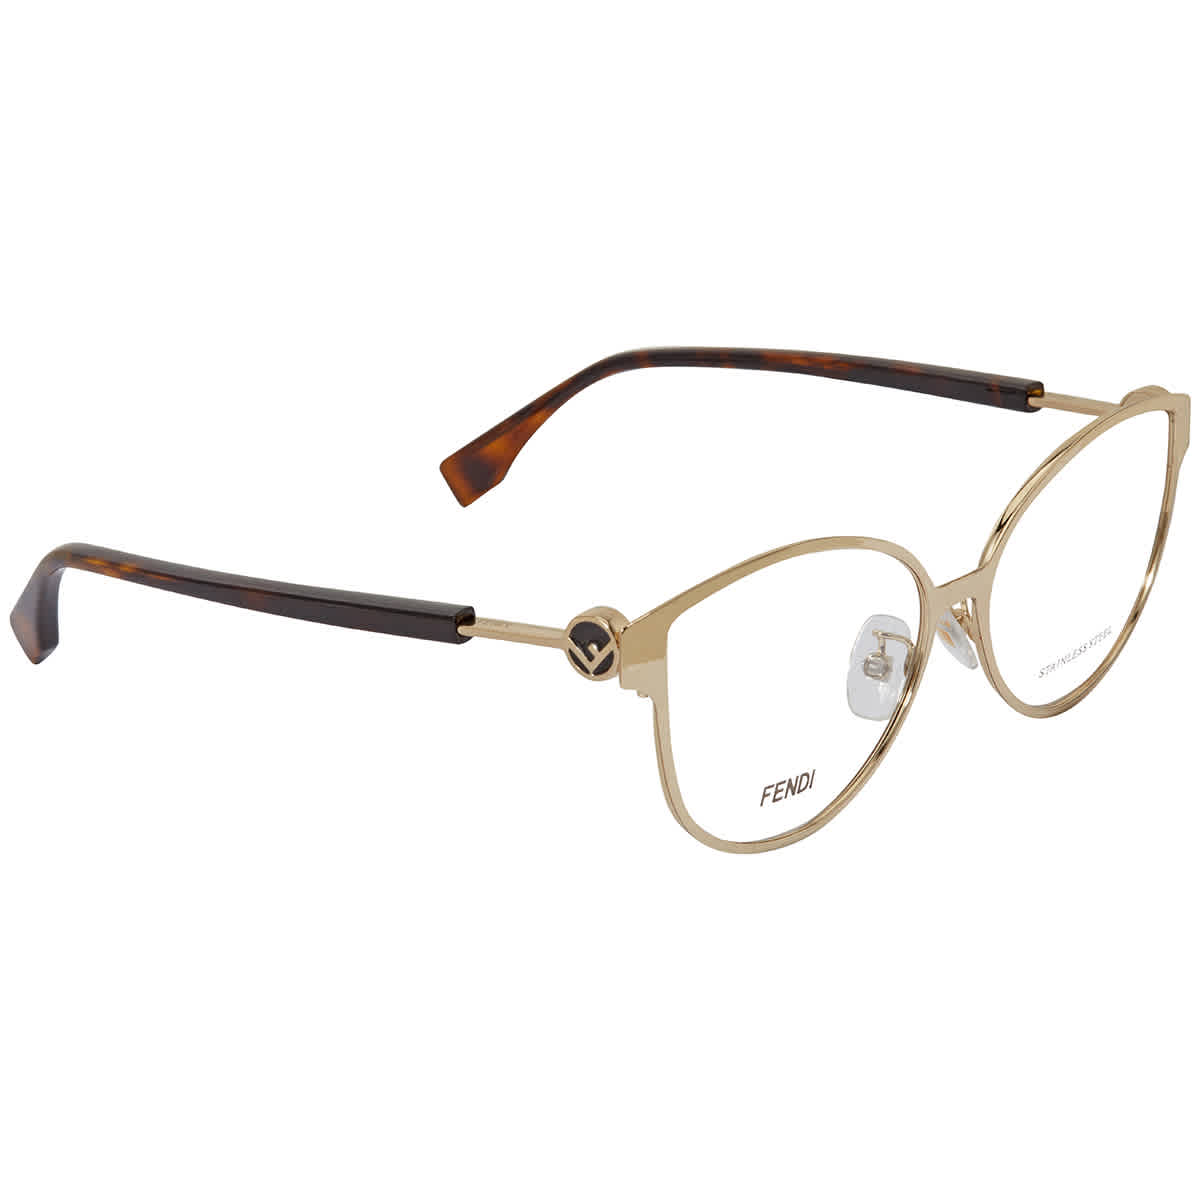 Fendi Clear Demo Lens Cat Eye Eyeglasses Ff 0396/f J5g 53 In Gold Tone